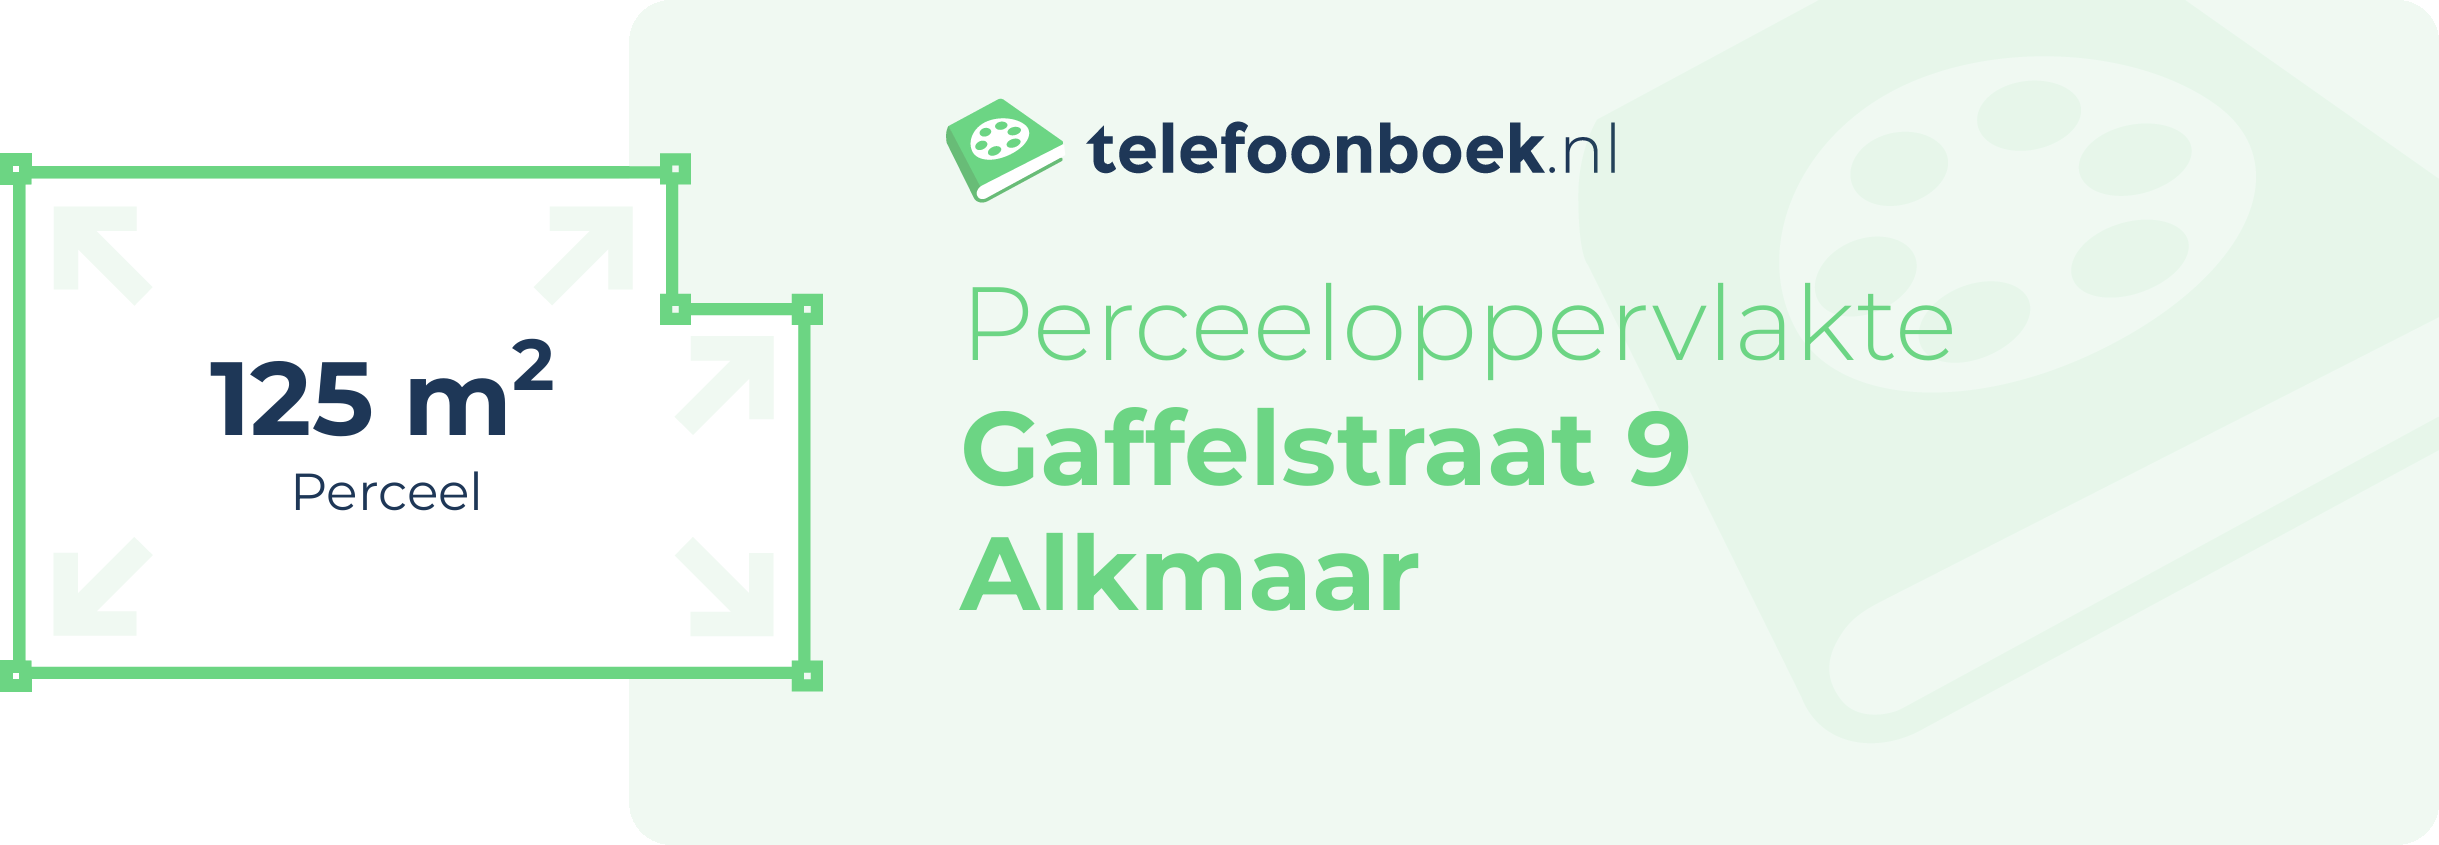 Perceeloppervlakte Gaffelstraat 9 Alkmaar